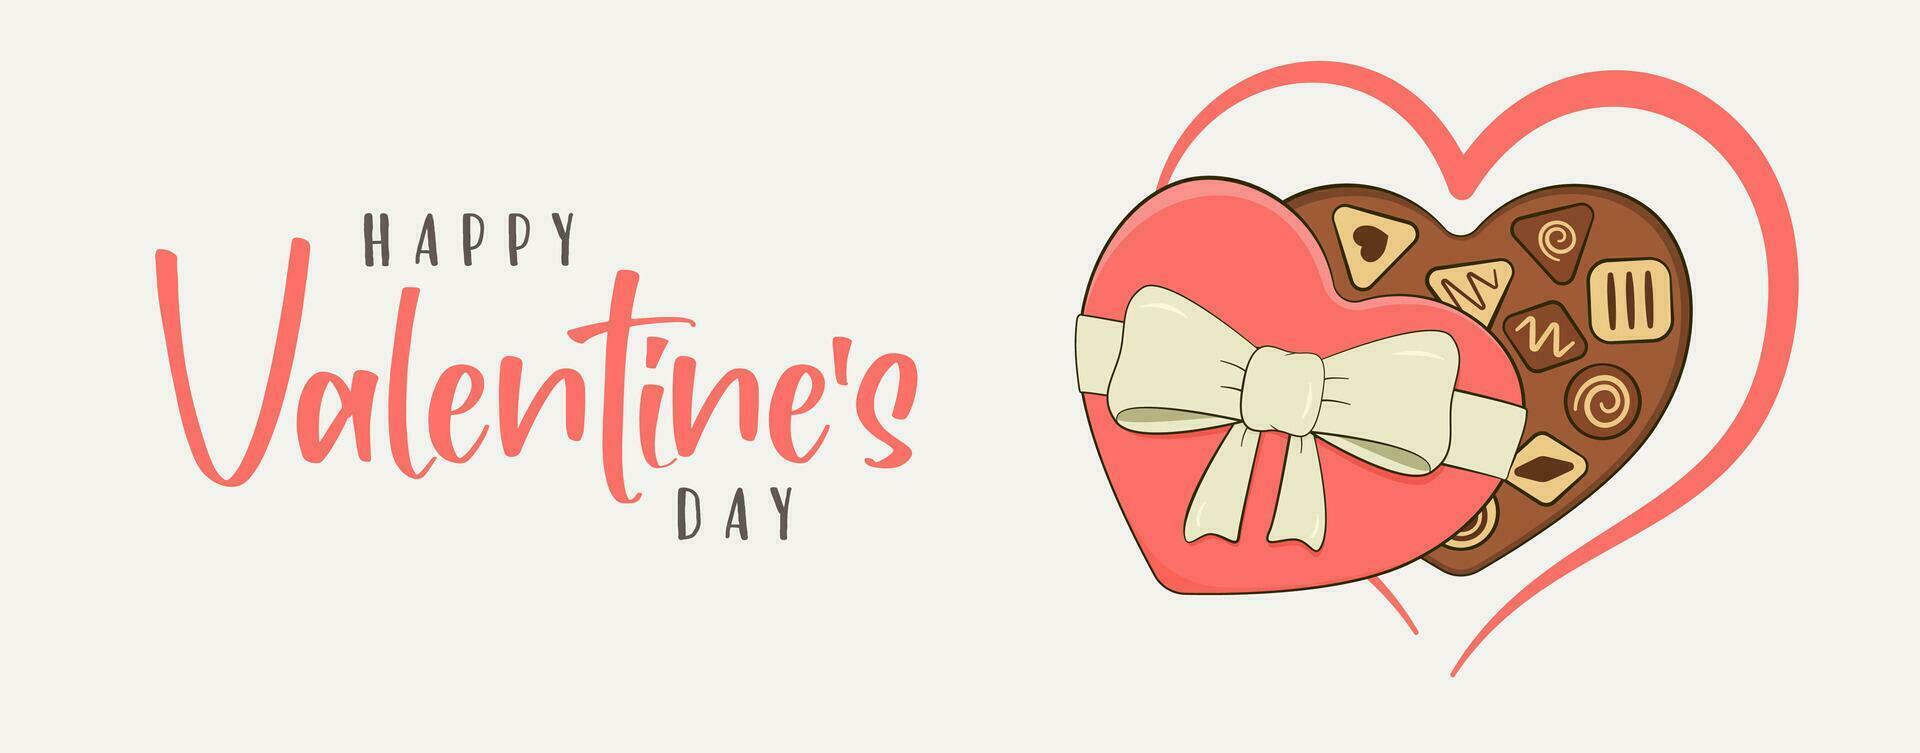 gelukkig Valentijnsdag dag, belettering. spandoek. chocola snoep met hartvormig doos vector